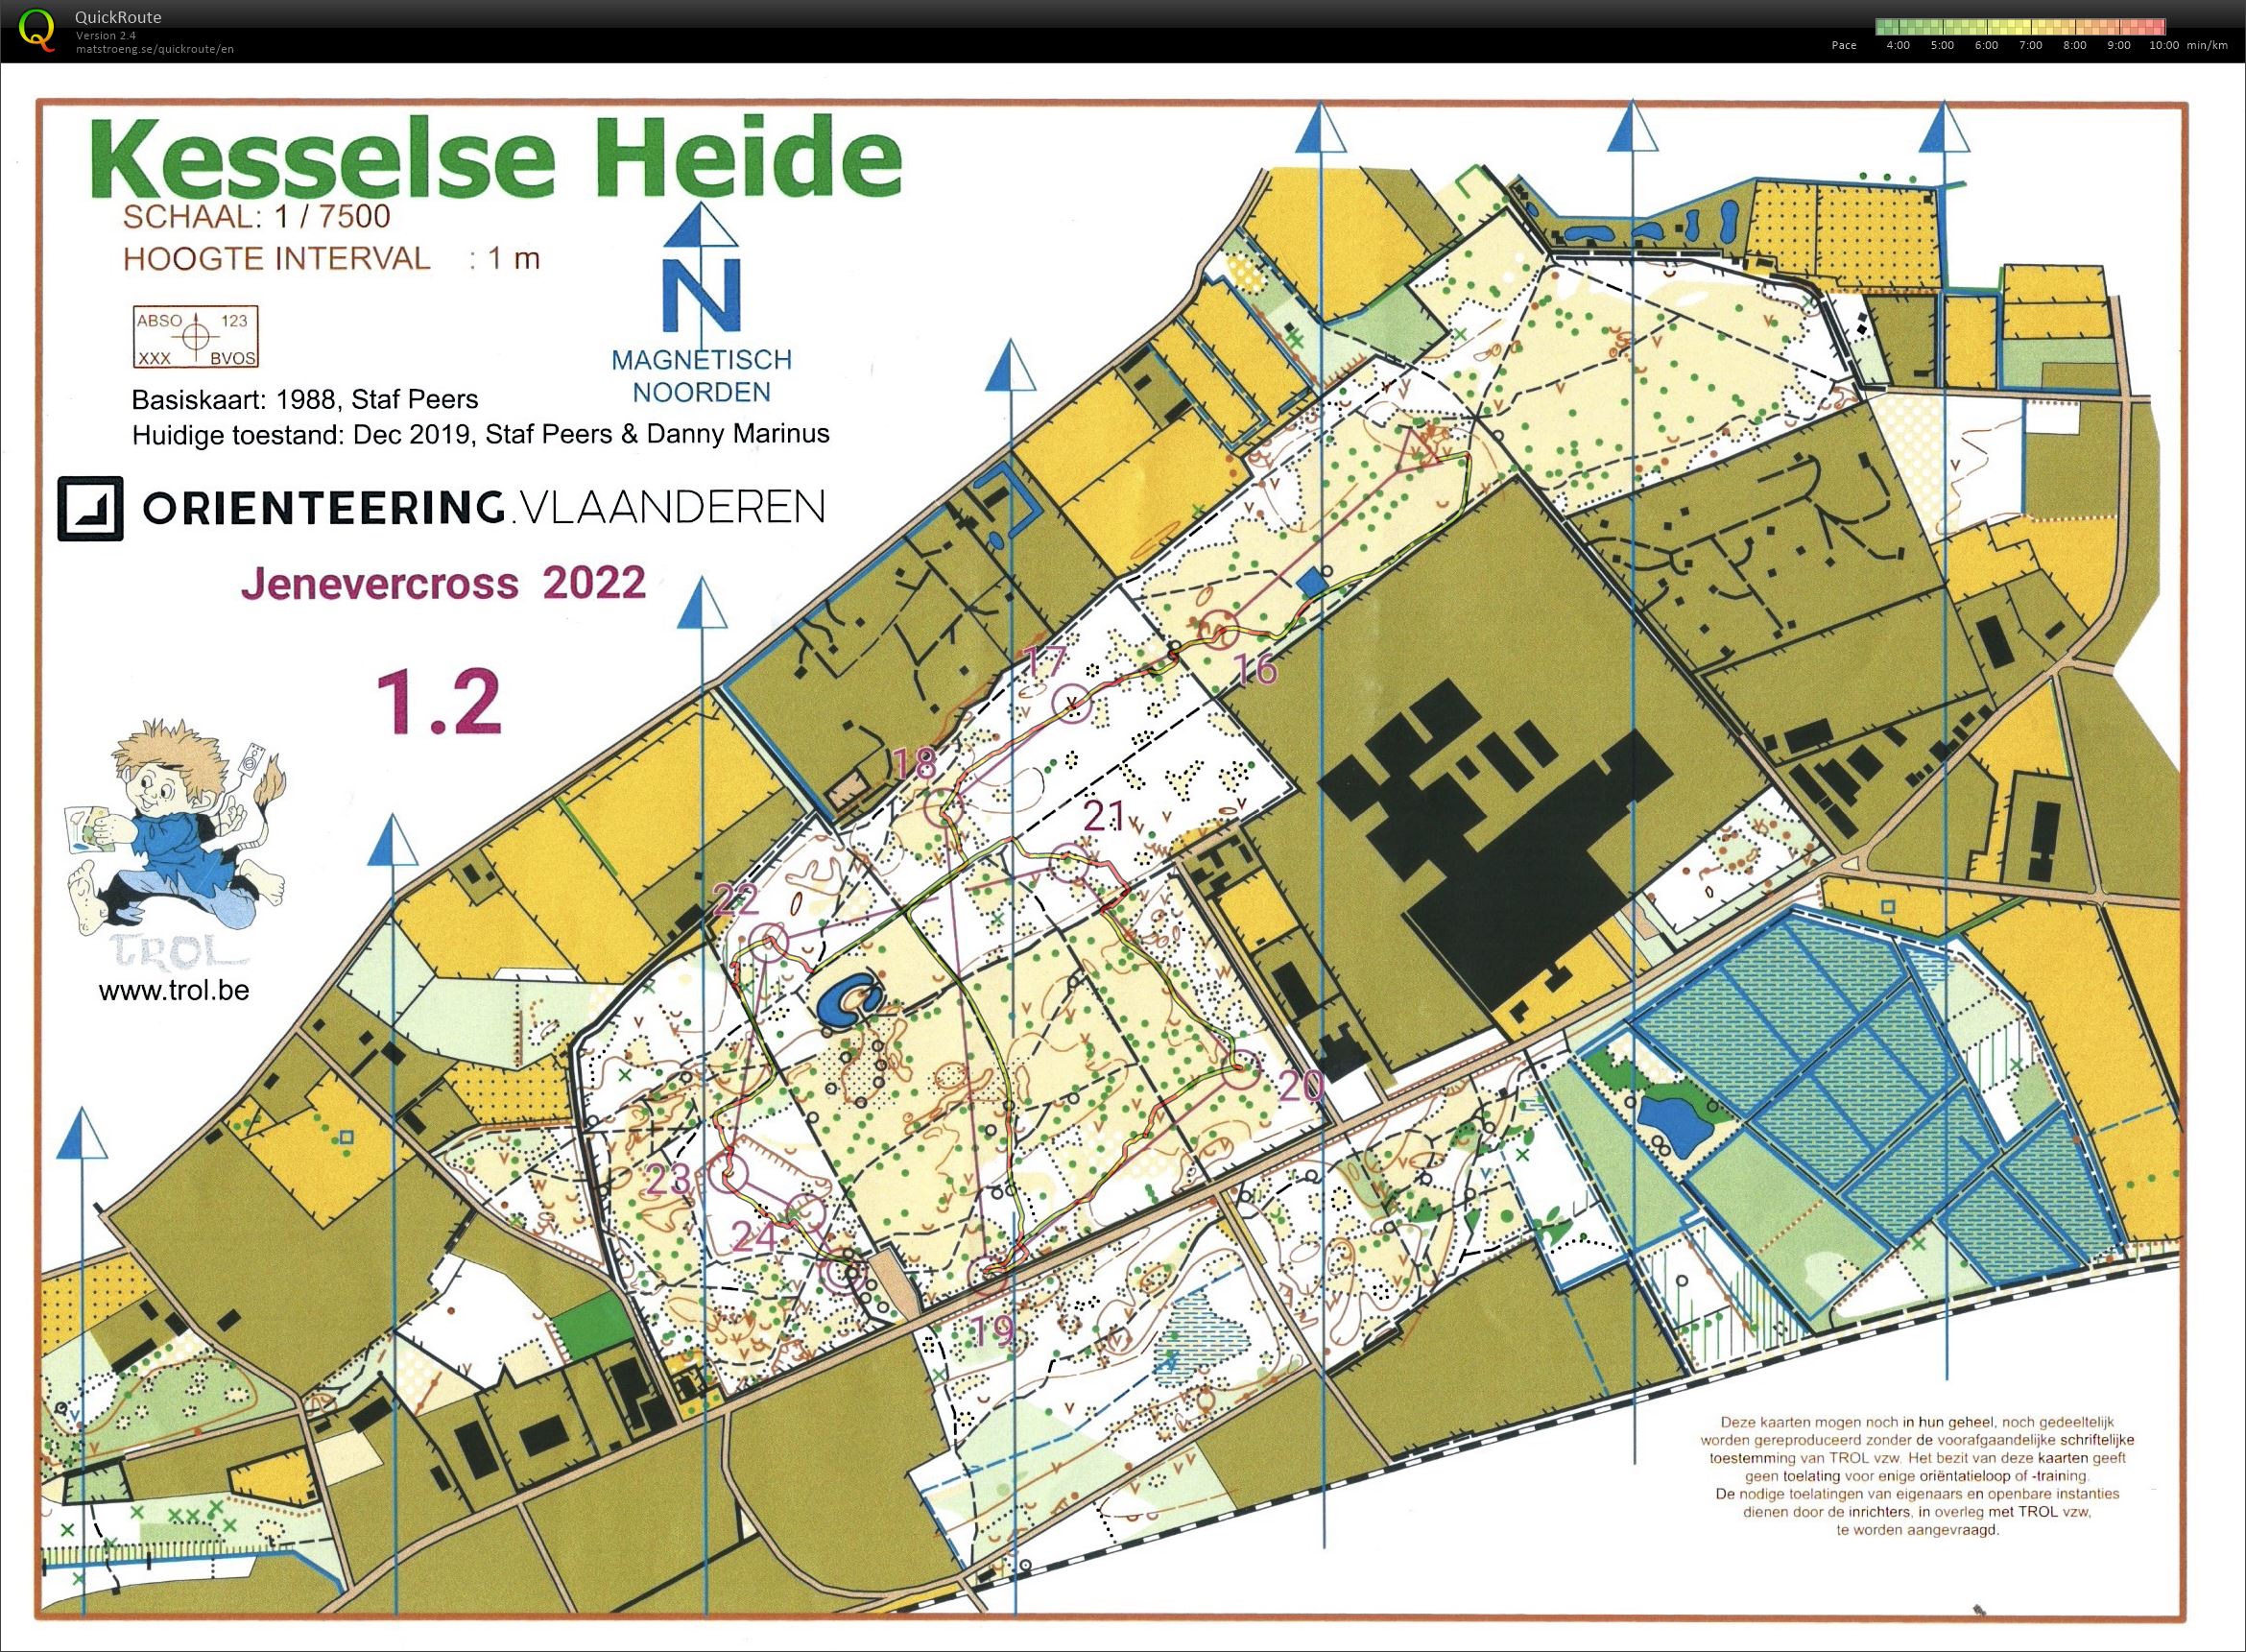 Jenevercross 2022 - Kesselse Heide - 1.2 (2022-01-07)